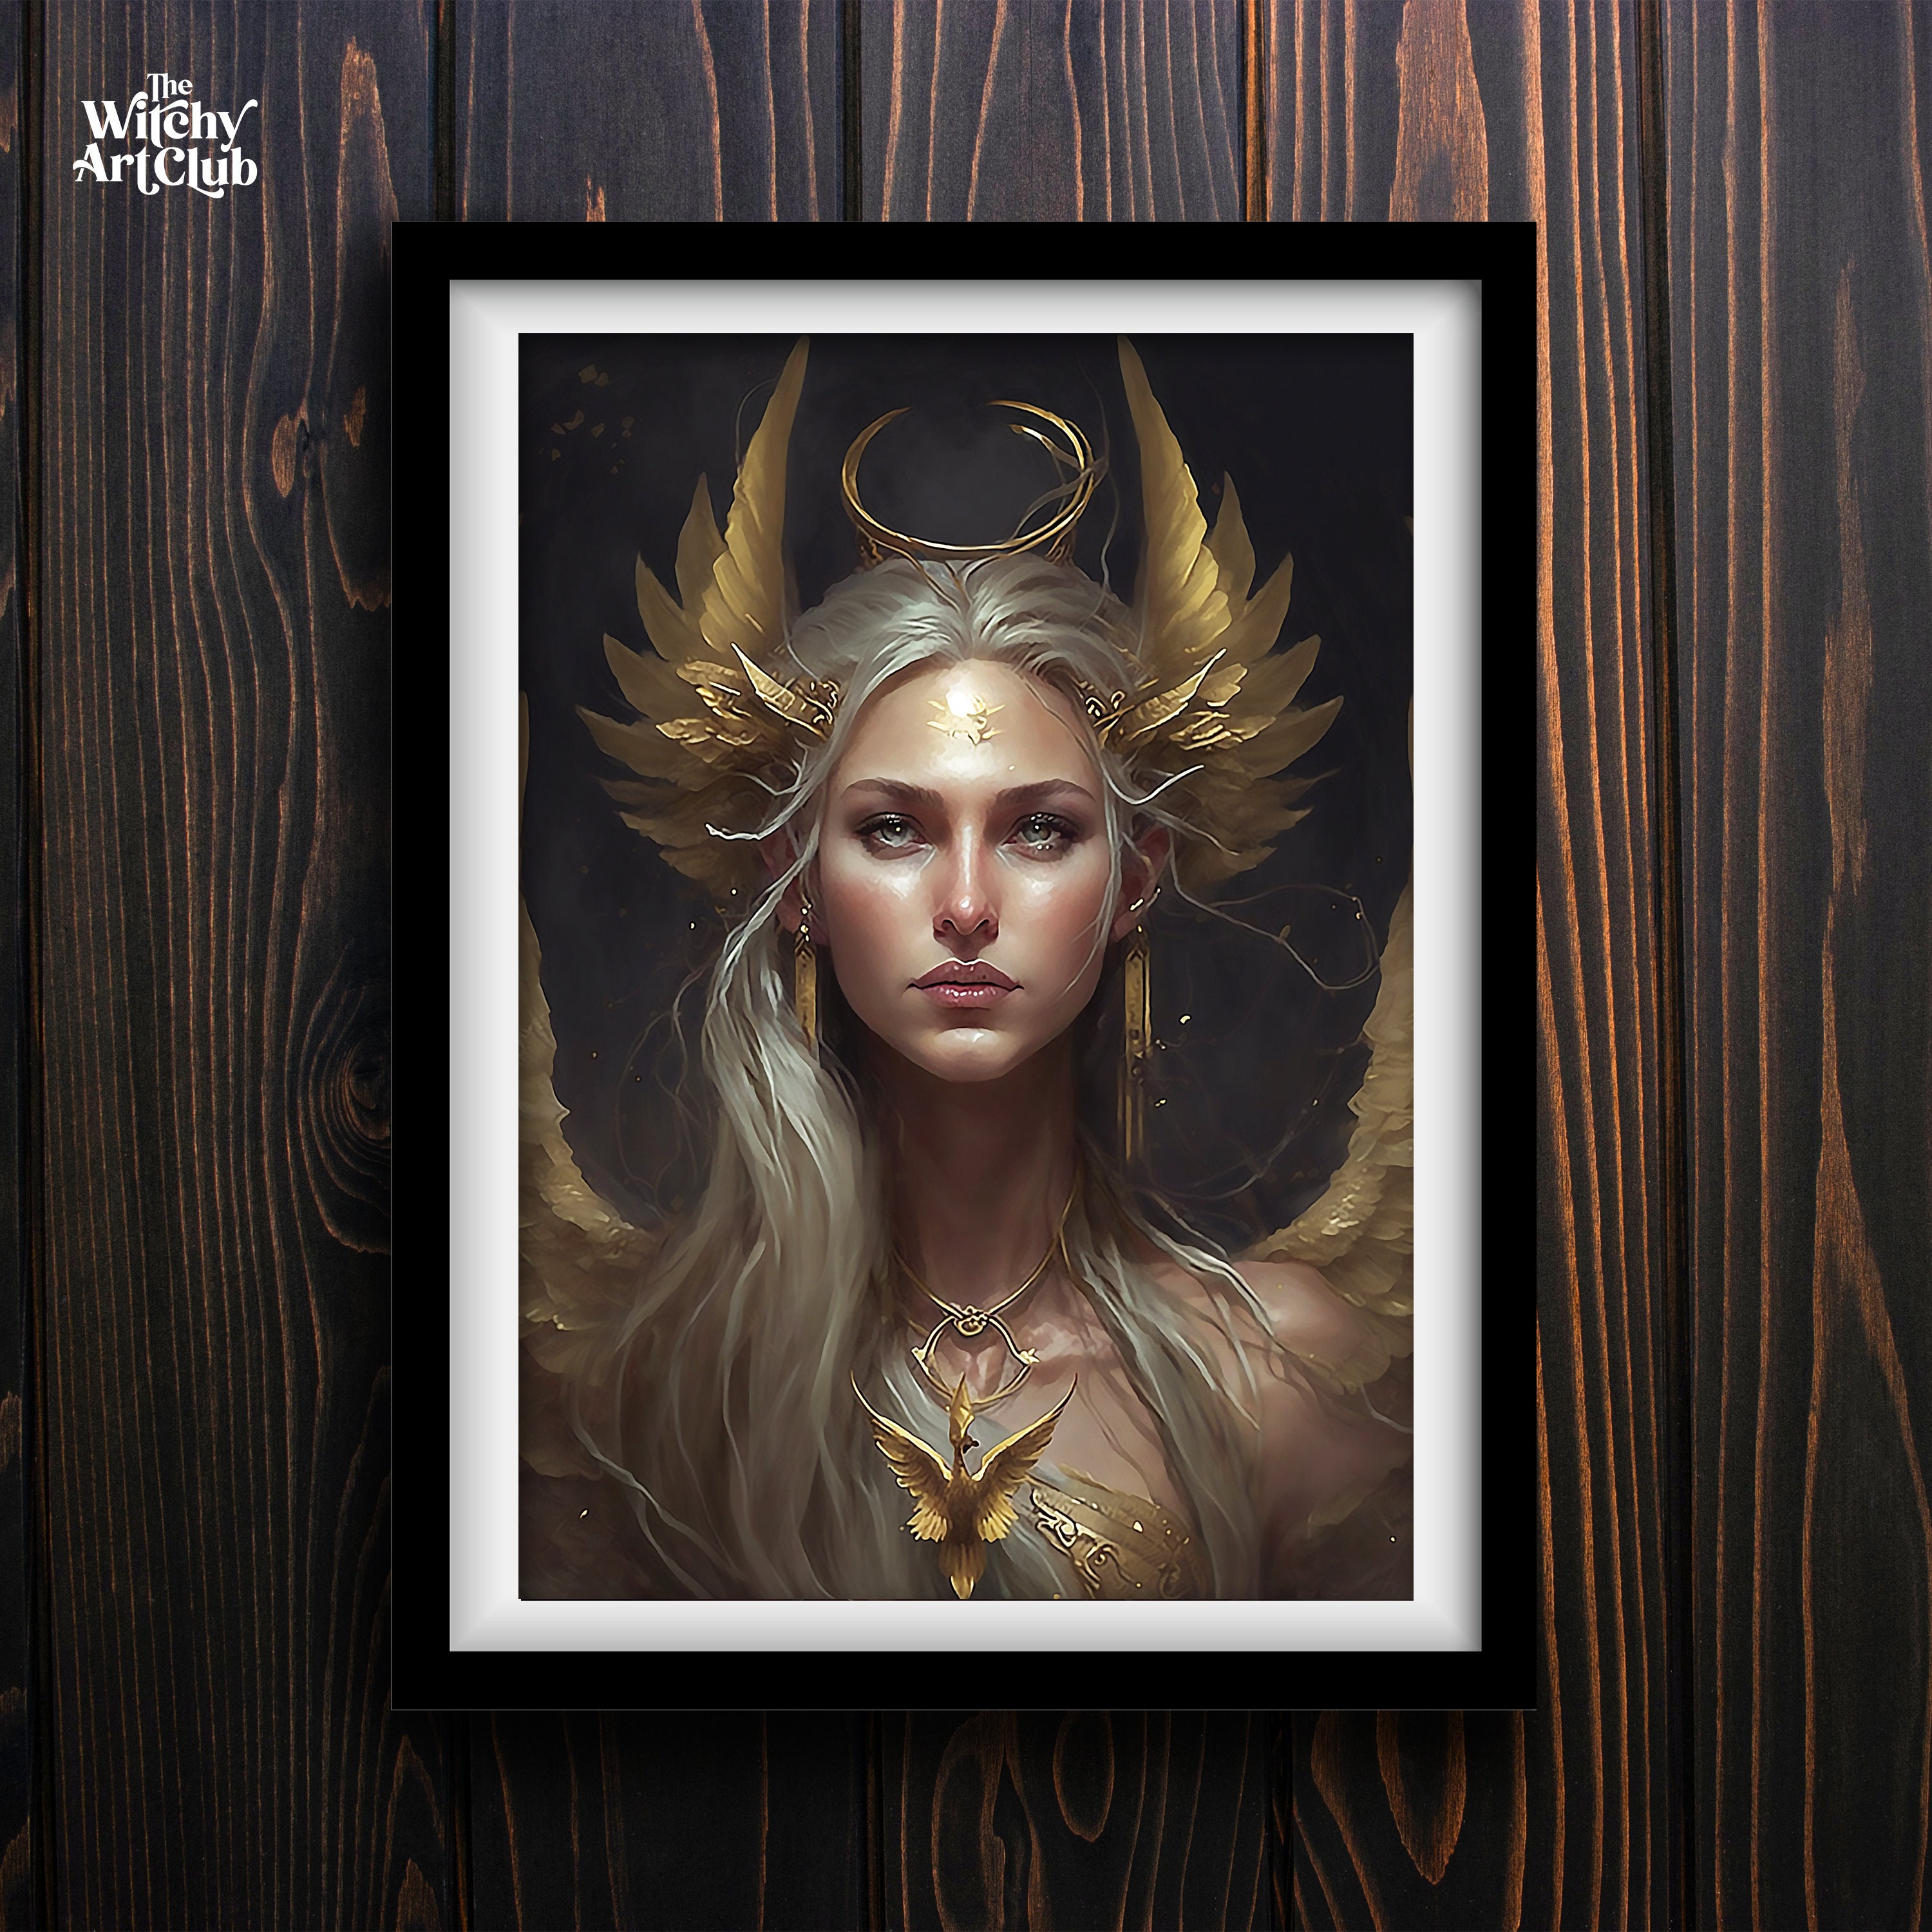 Frigg Norse Goddess | Frigga Painting Art Print | All Mother